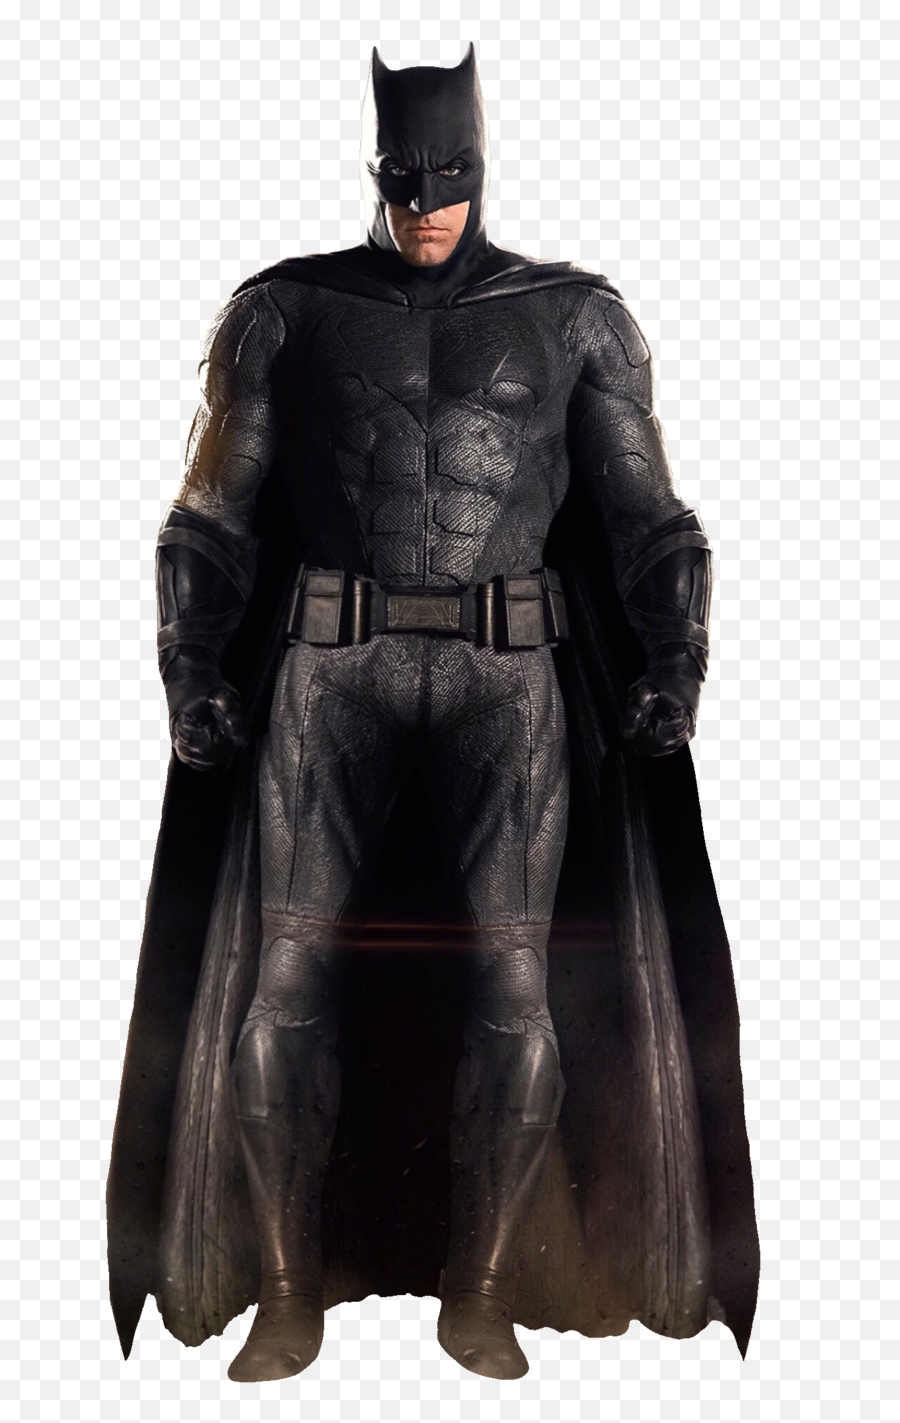 Batman Png Picture - Batman V Superman Batsuit,Batman Png